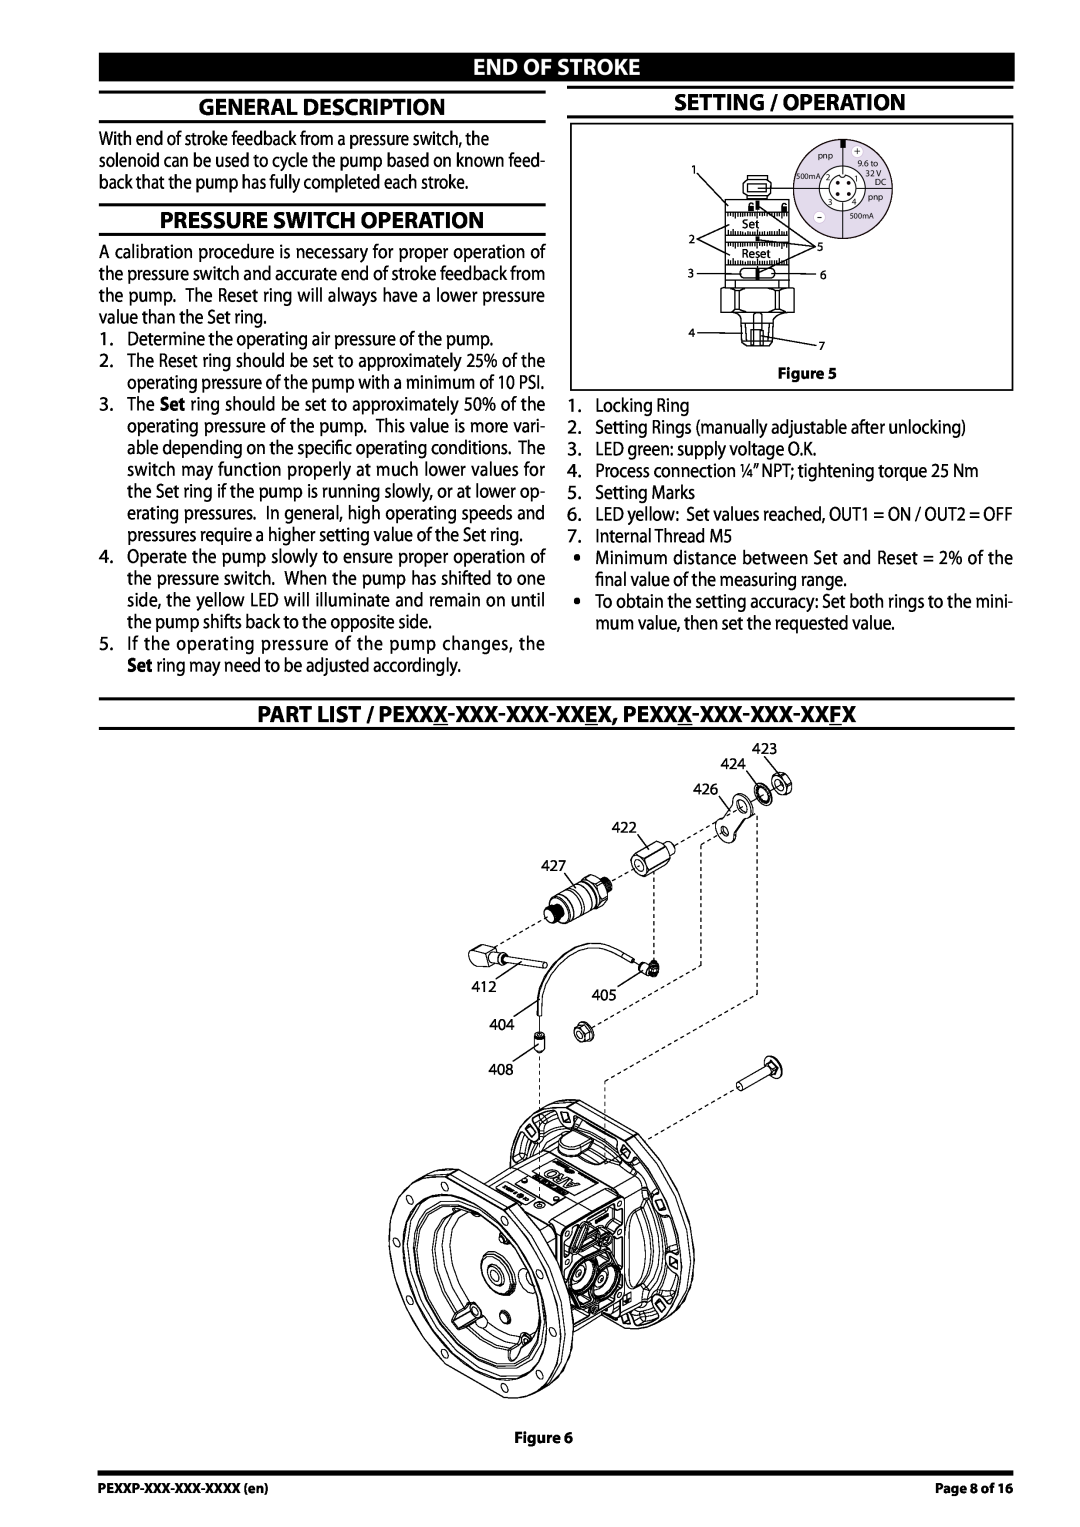 Ingersoll-Rand PE30X-XXX-XXX-XXXX manual End Of Stroke, Pressure switch operation, Setting / Operation, Internal Thread M5 